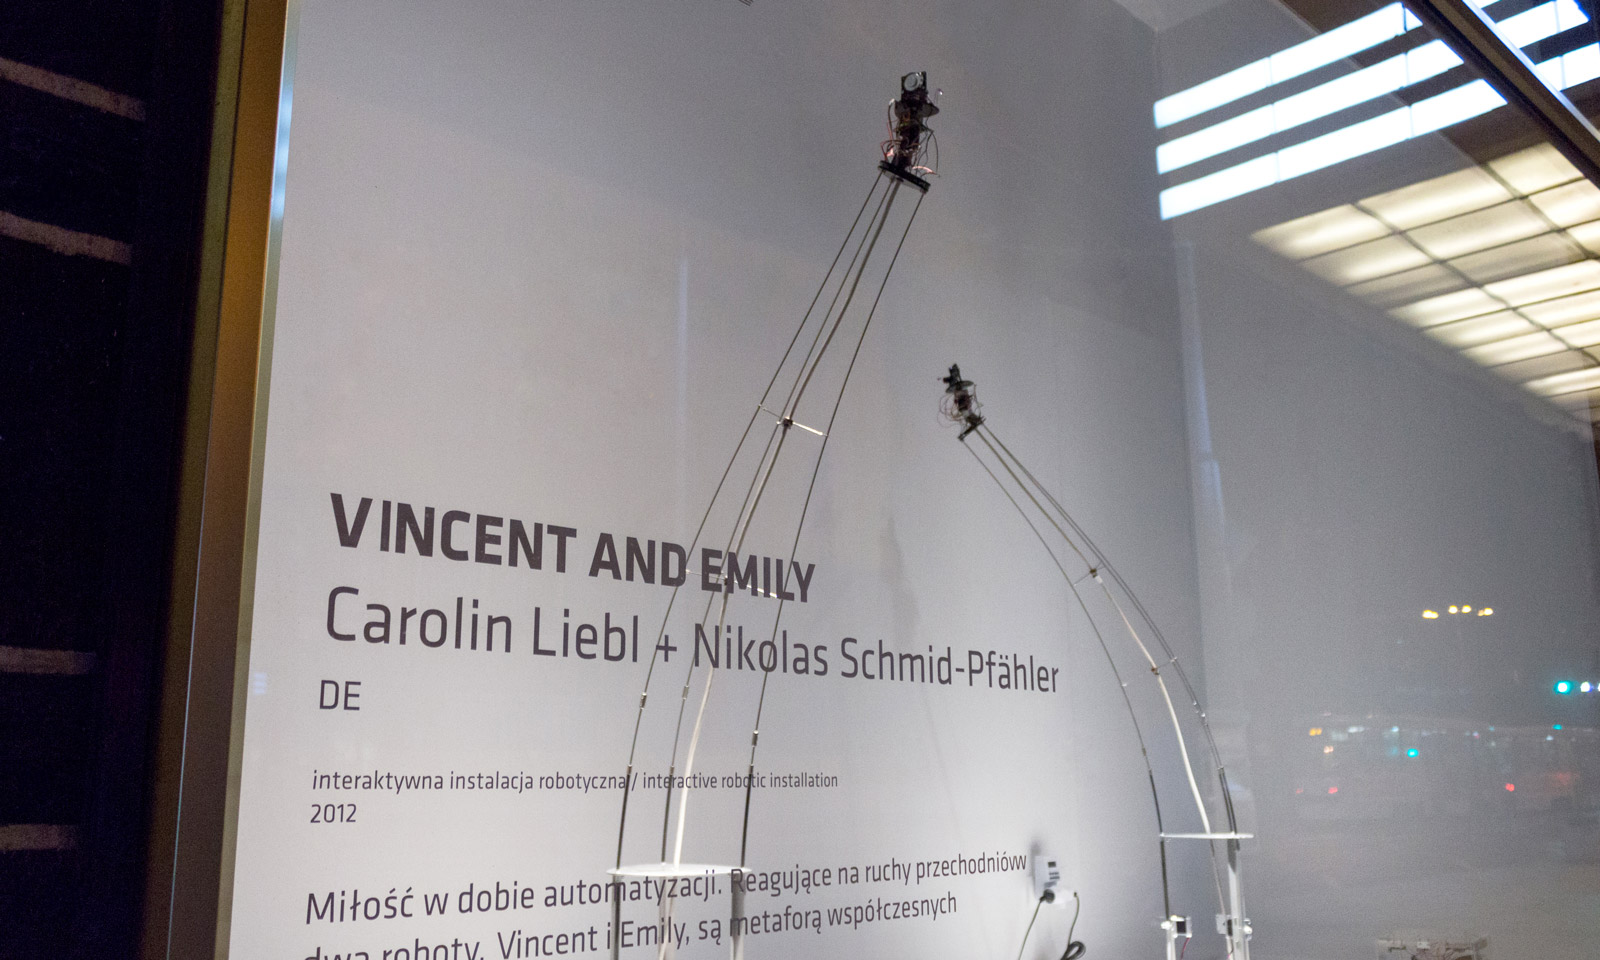 Vincent and Emily 2013 robotic artwork by Carolin Liebl and Nikolas Schmid-Pfähler